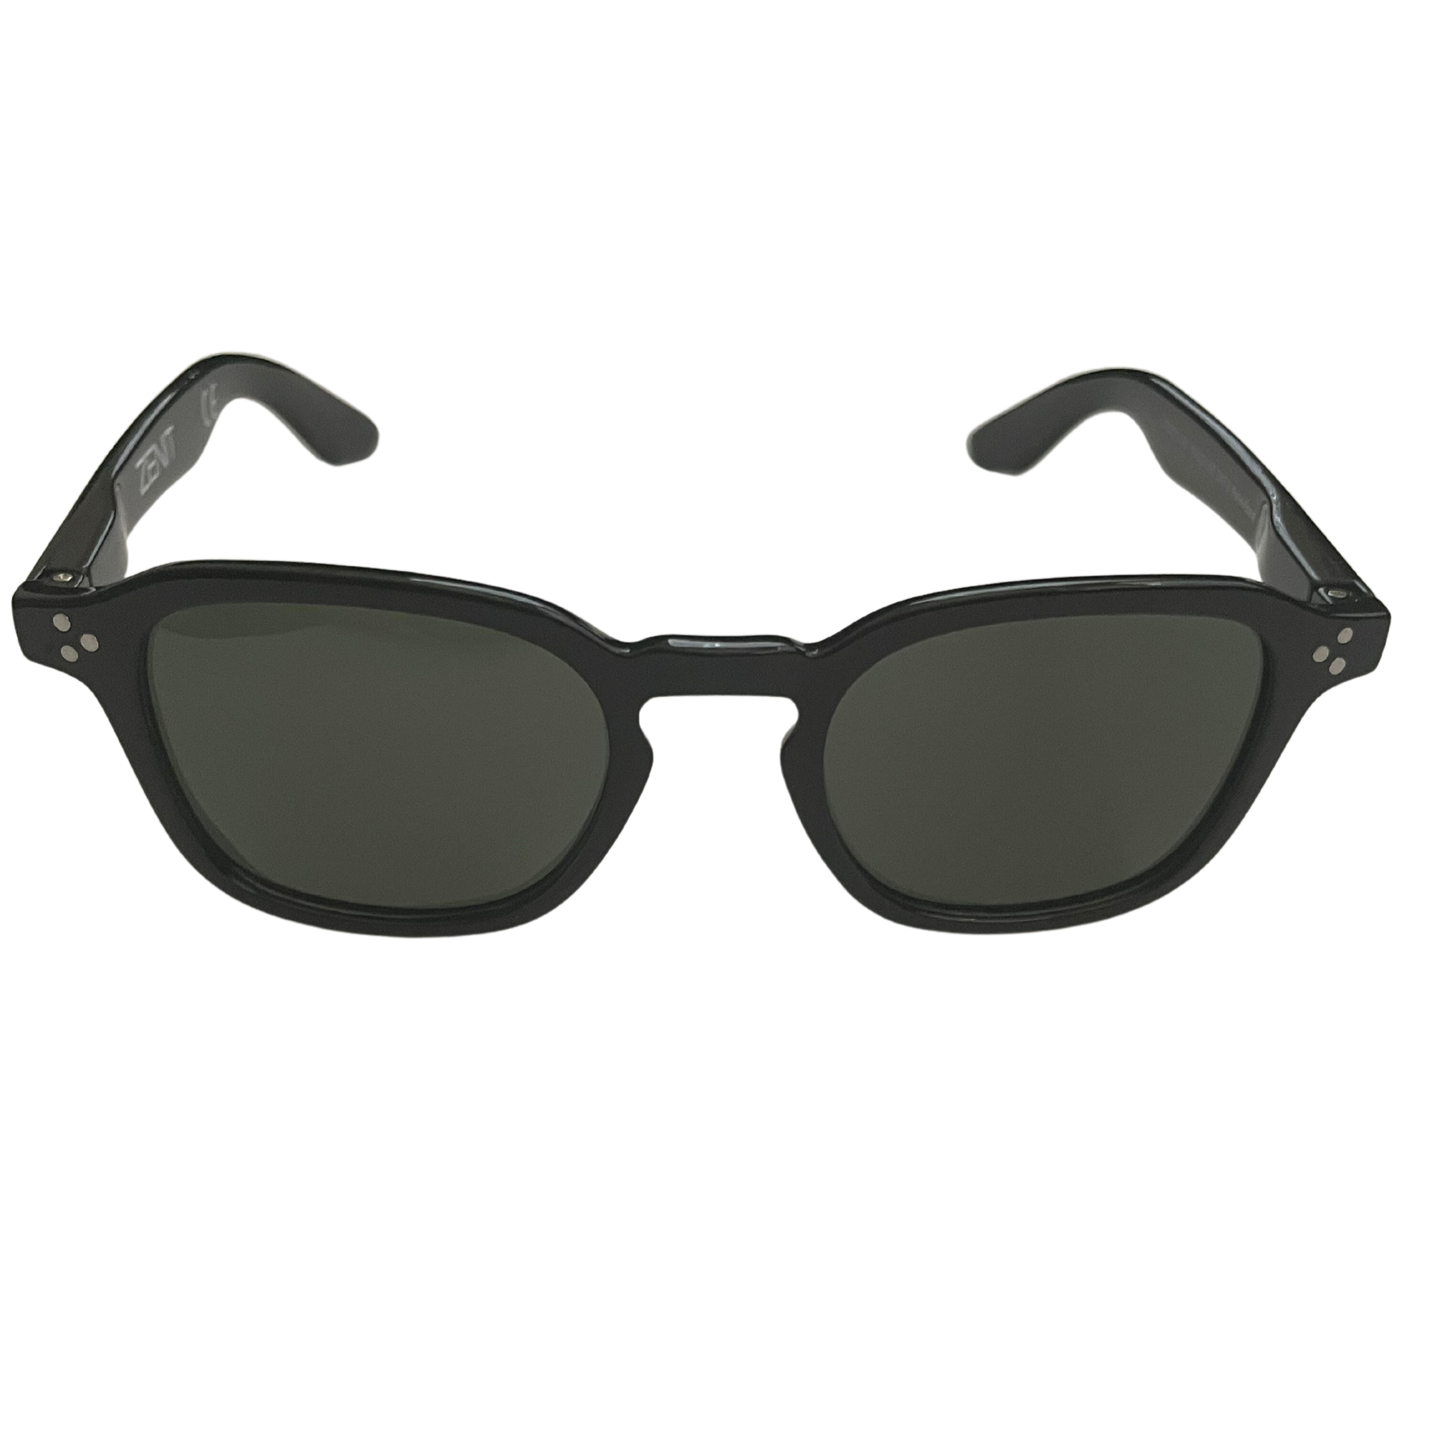 Zenit Unisex Polarized Square Sunglasses Black / green lenses